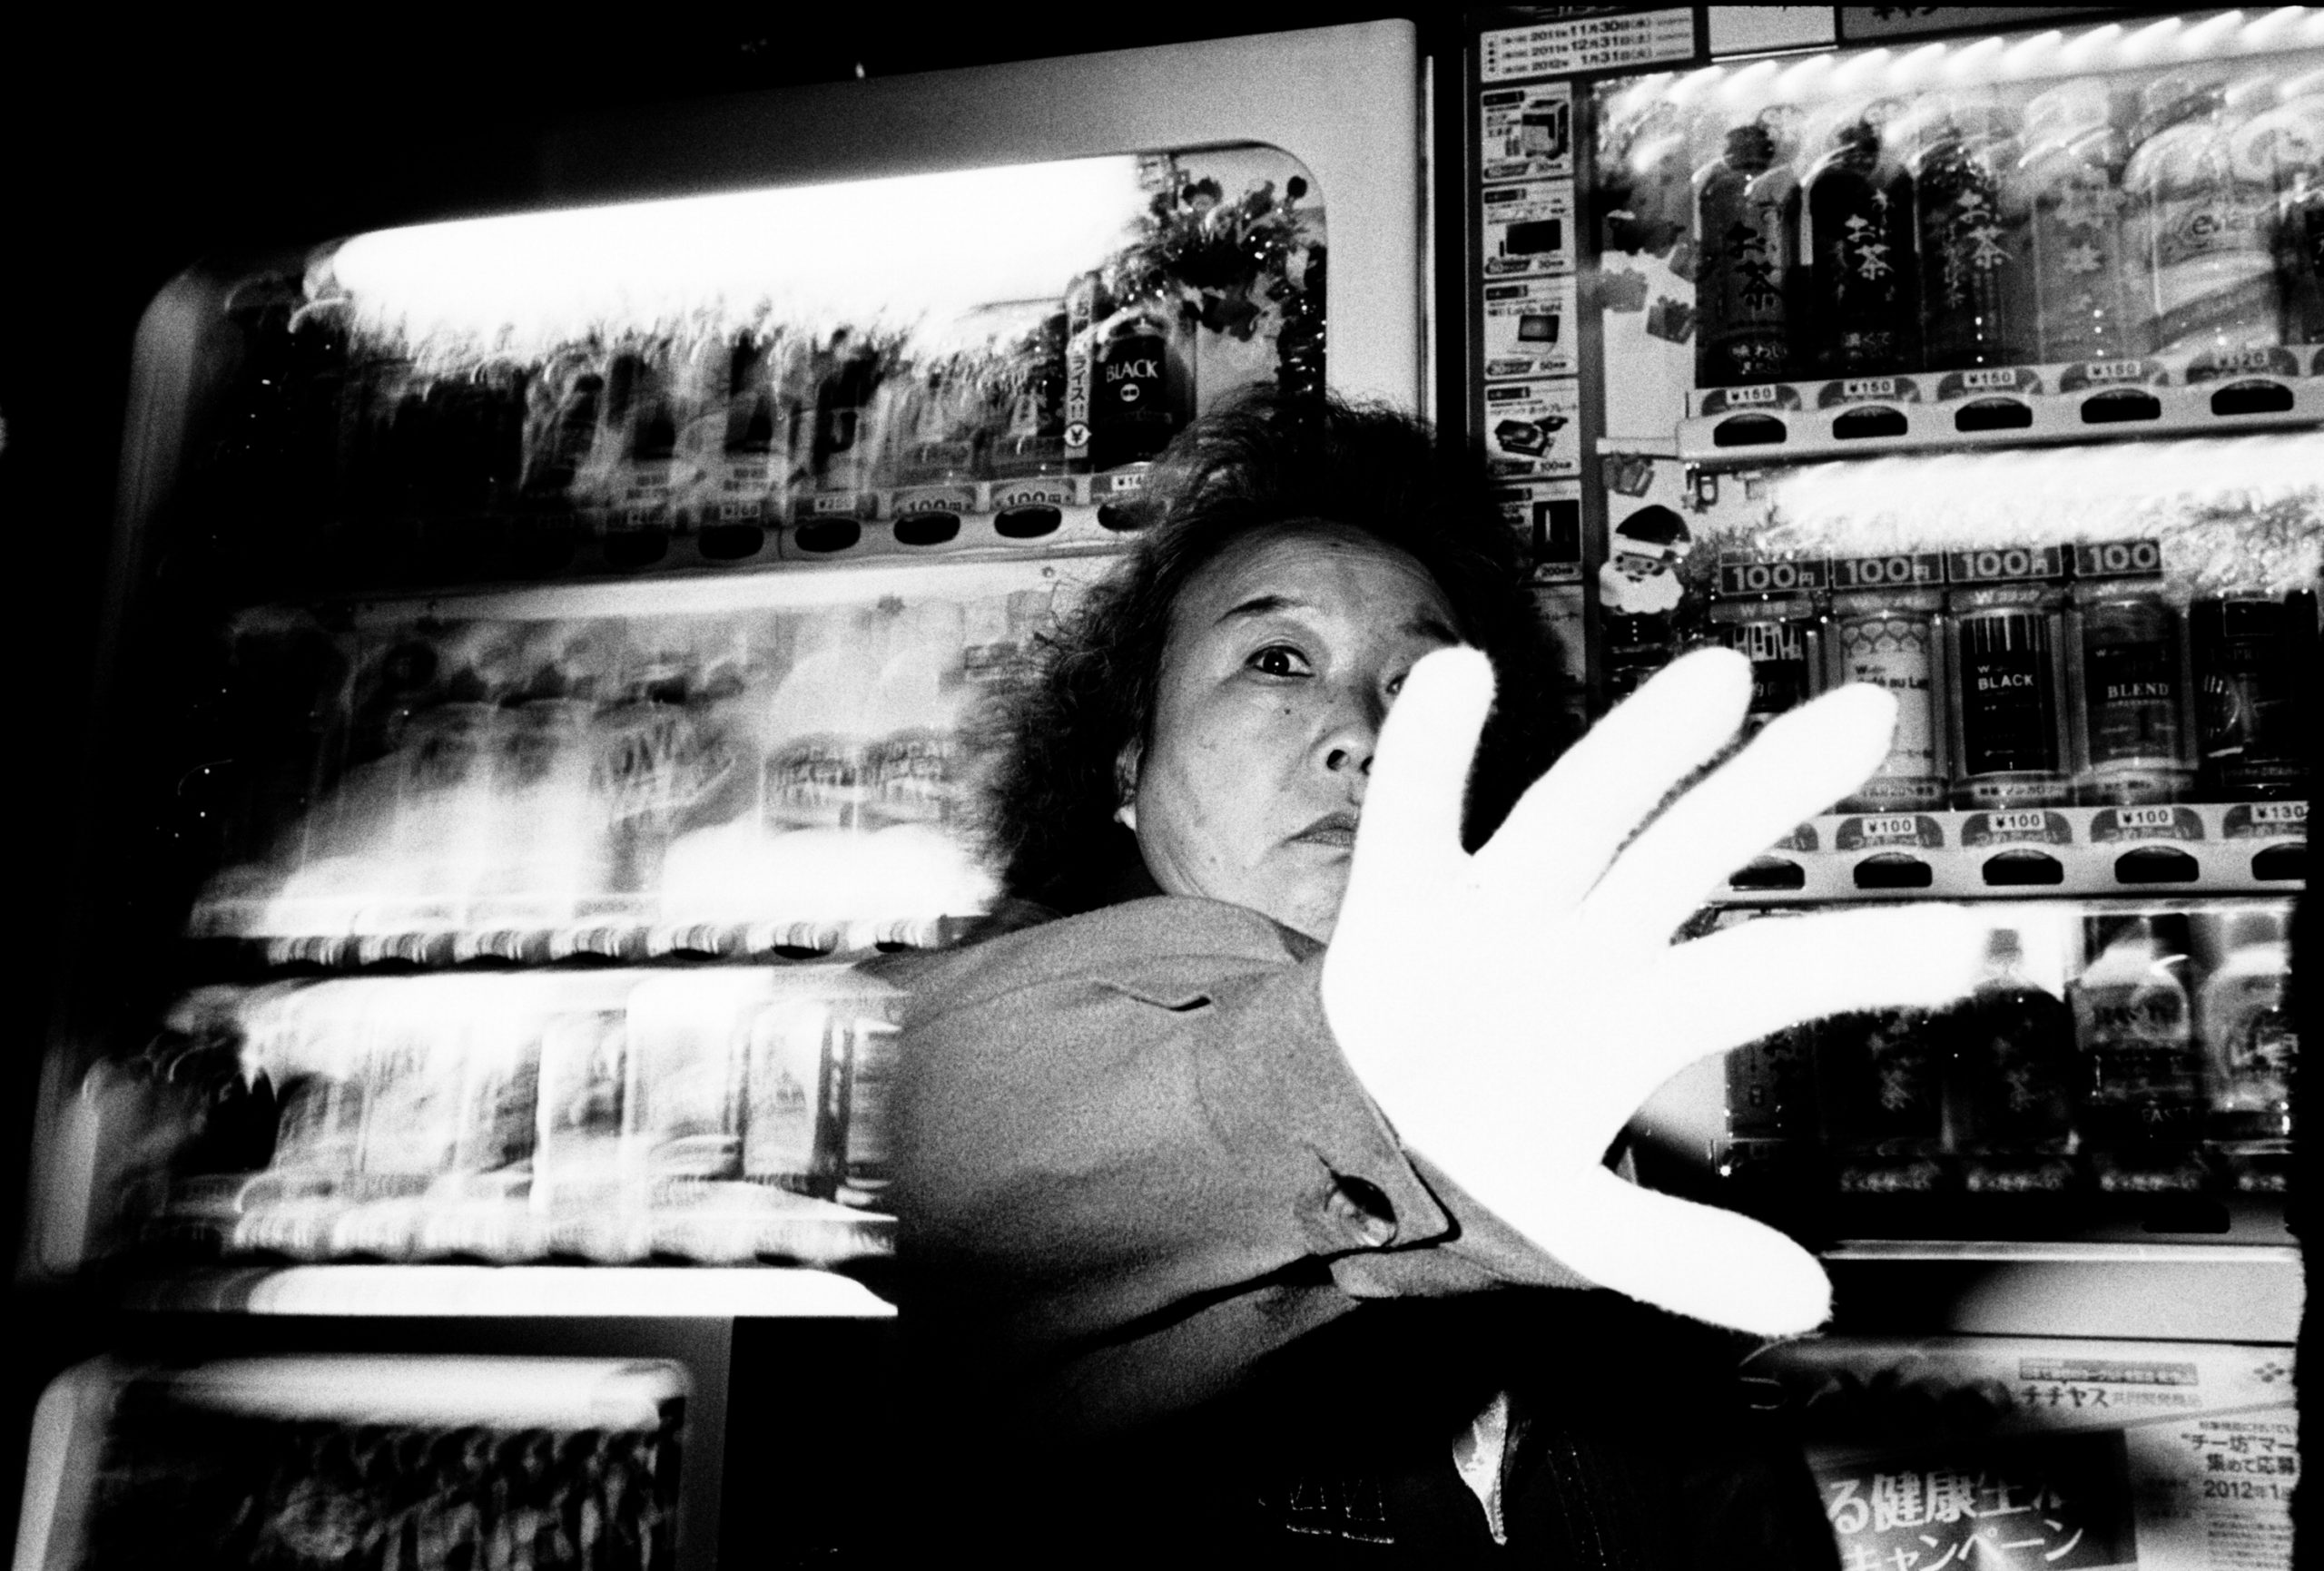 Tokyo woman with hand. 1.2 meters, flash, Kodak Tri-X 400, Leica M6, 35mm